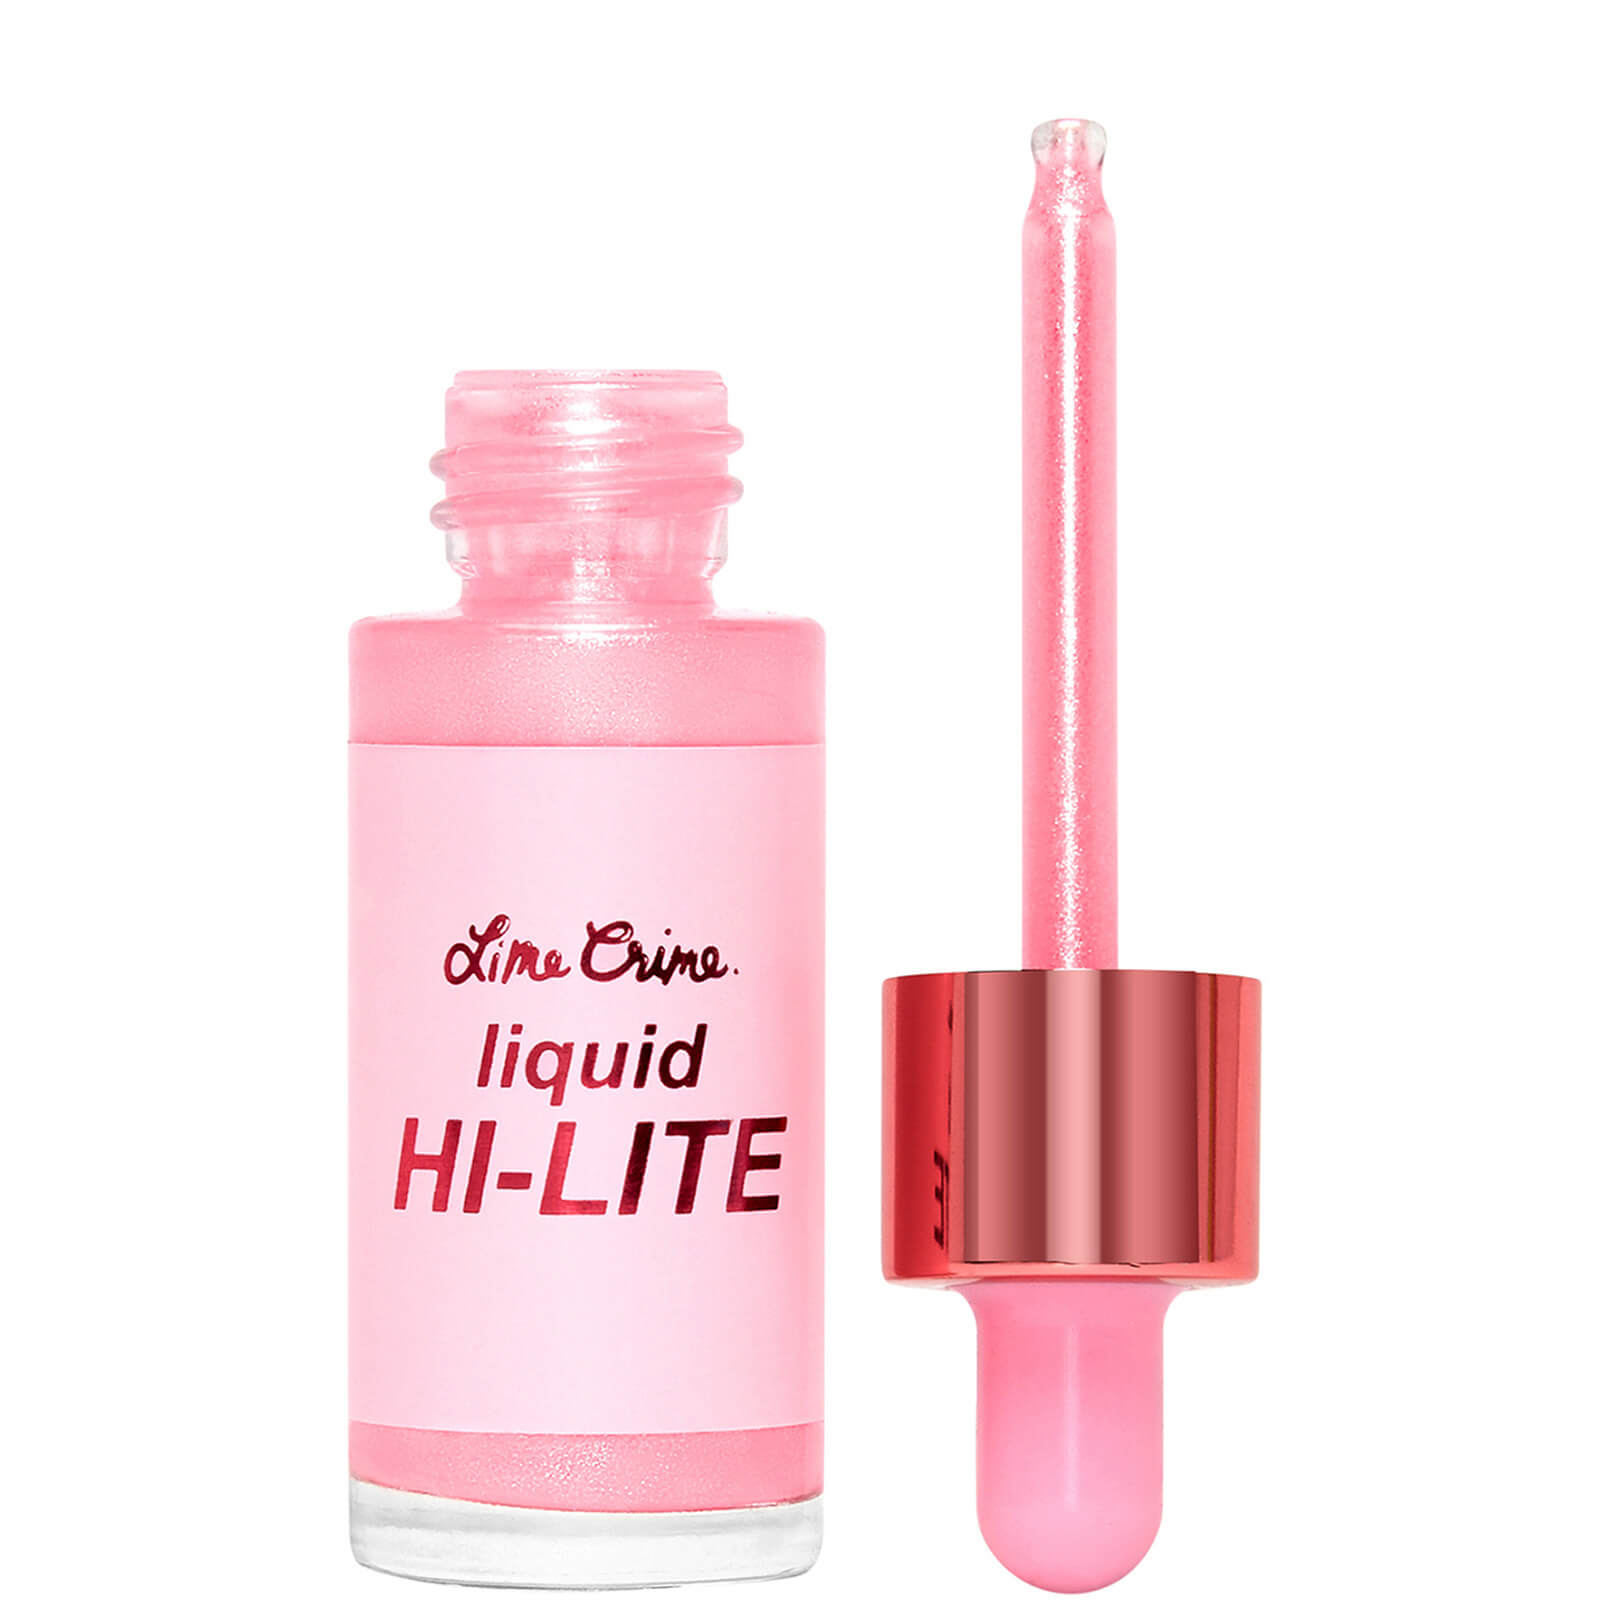 Lime Crime Liquid Hi-lite Pink Glaze